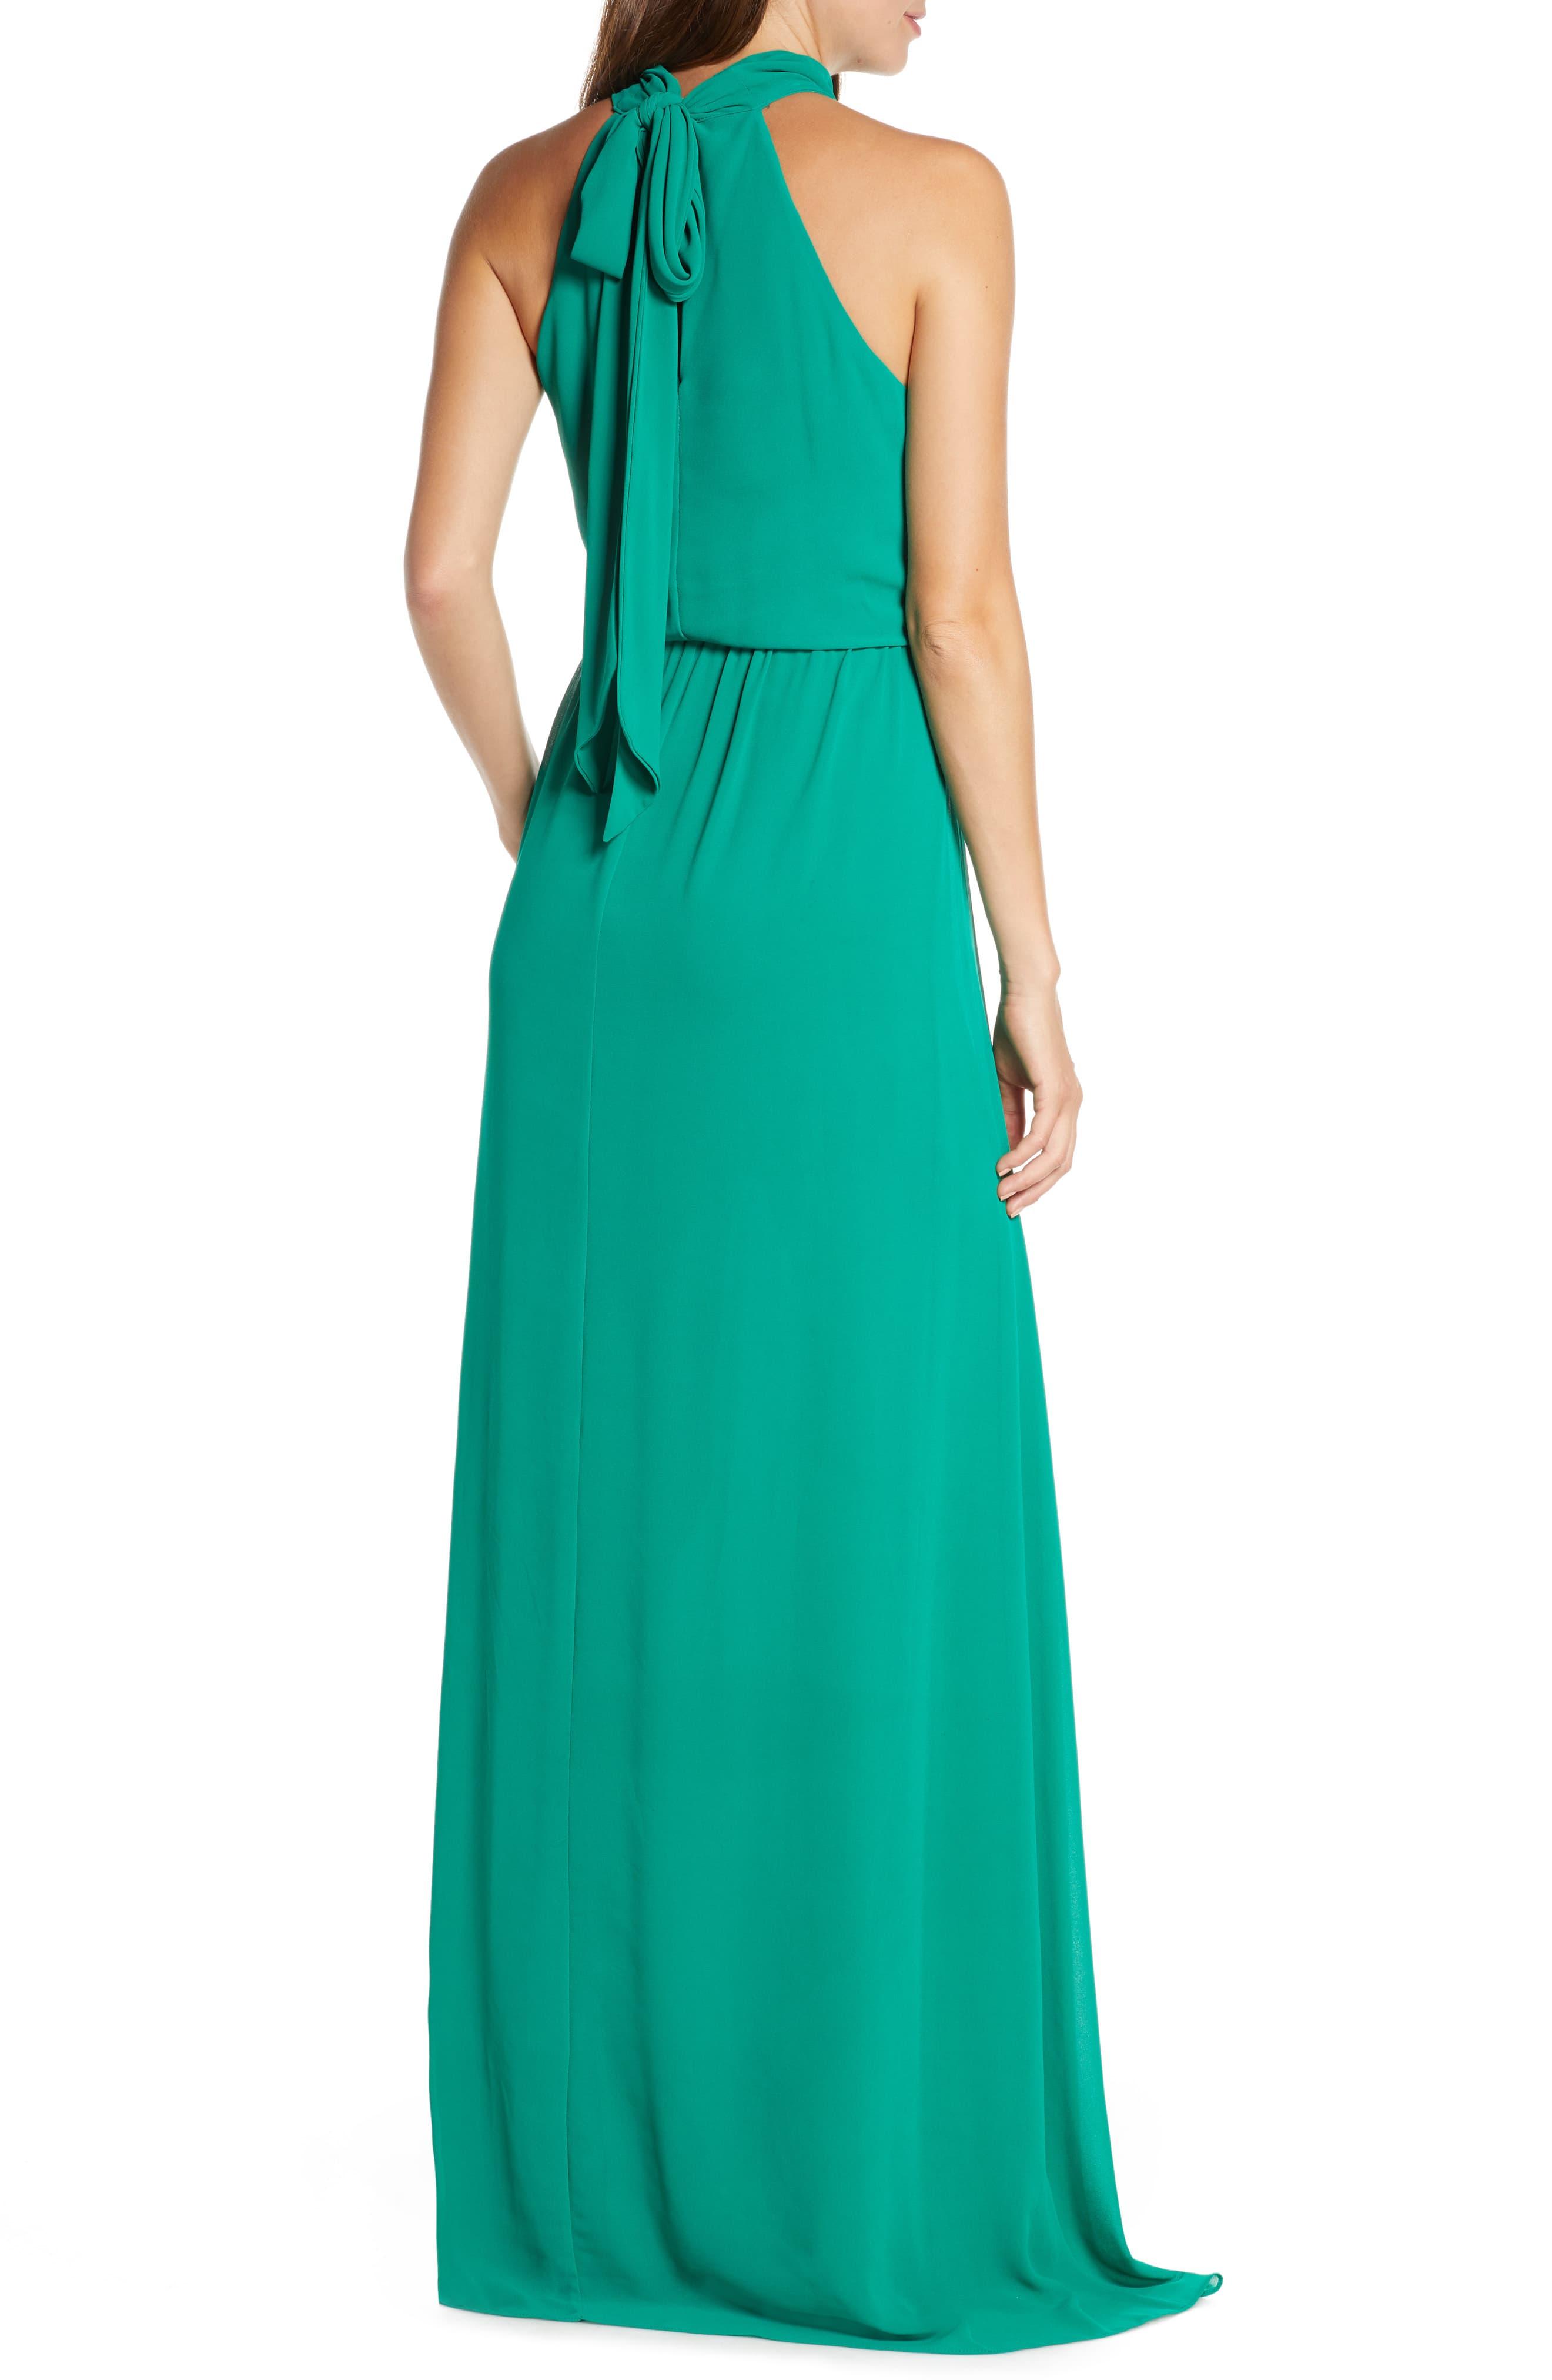 Badgley Mischka Chiffon Mock Neck Maxi Dress in Emerald (Green) - Lyst